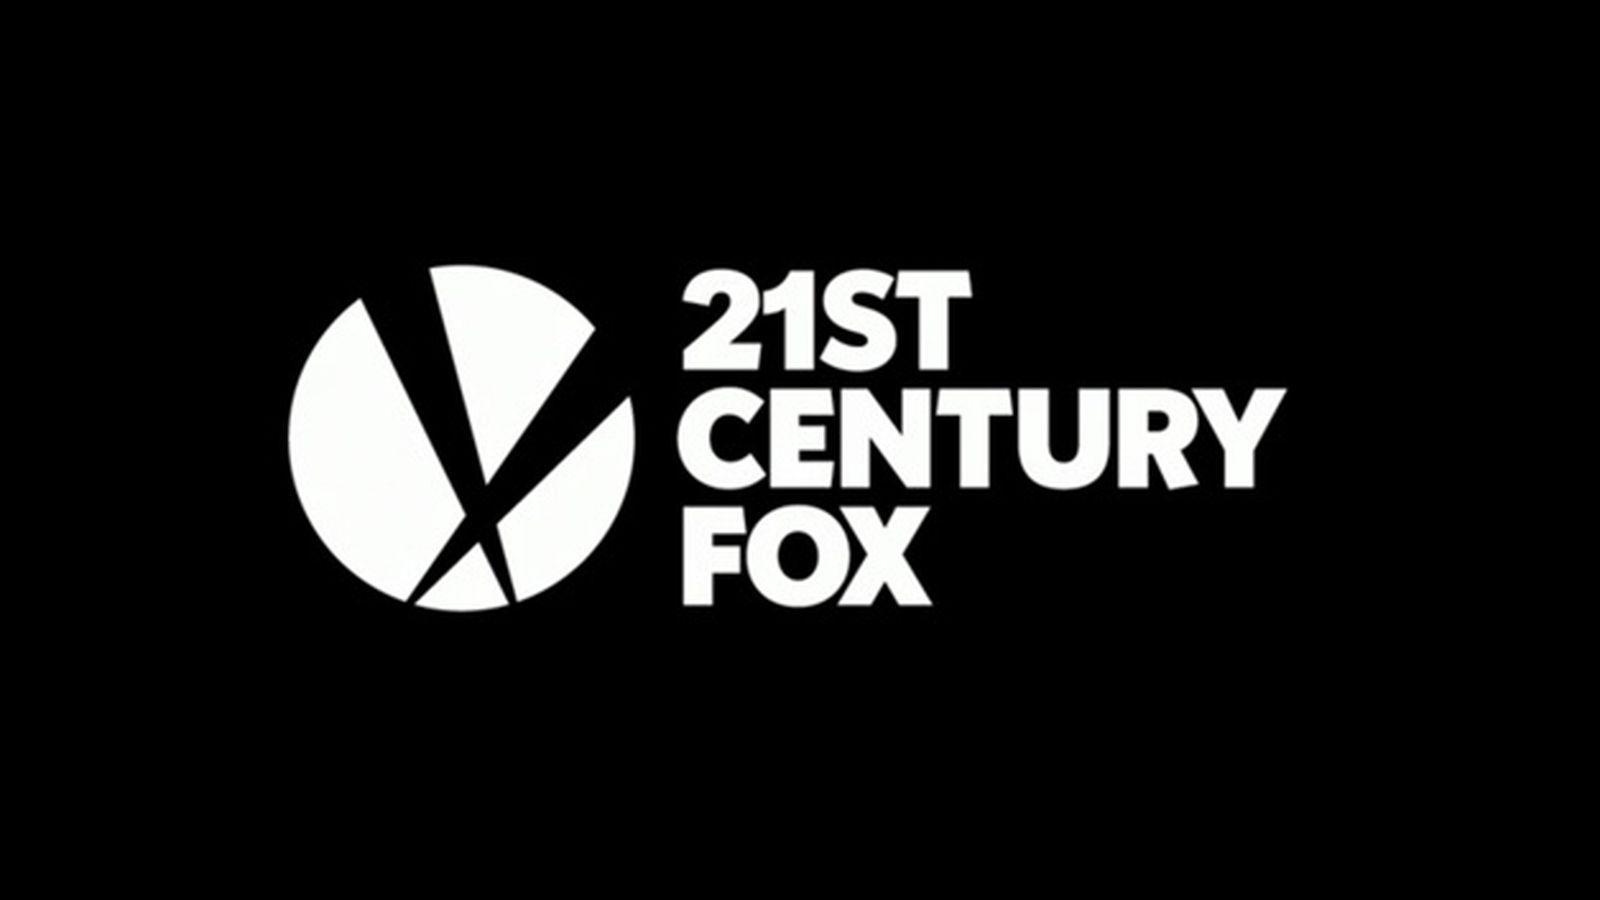 20th Century Fox Logo - 21st Century Fox logo unveiled ahead of News Corp split - The Verge